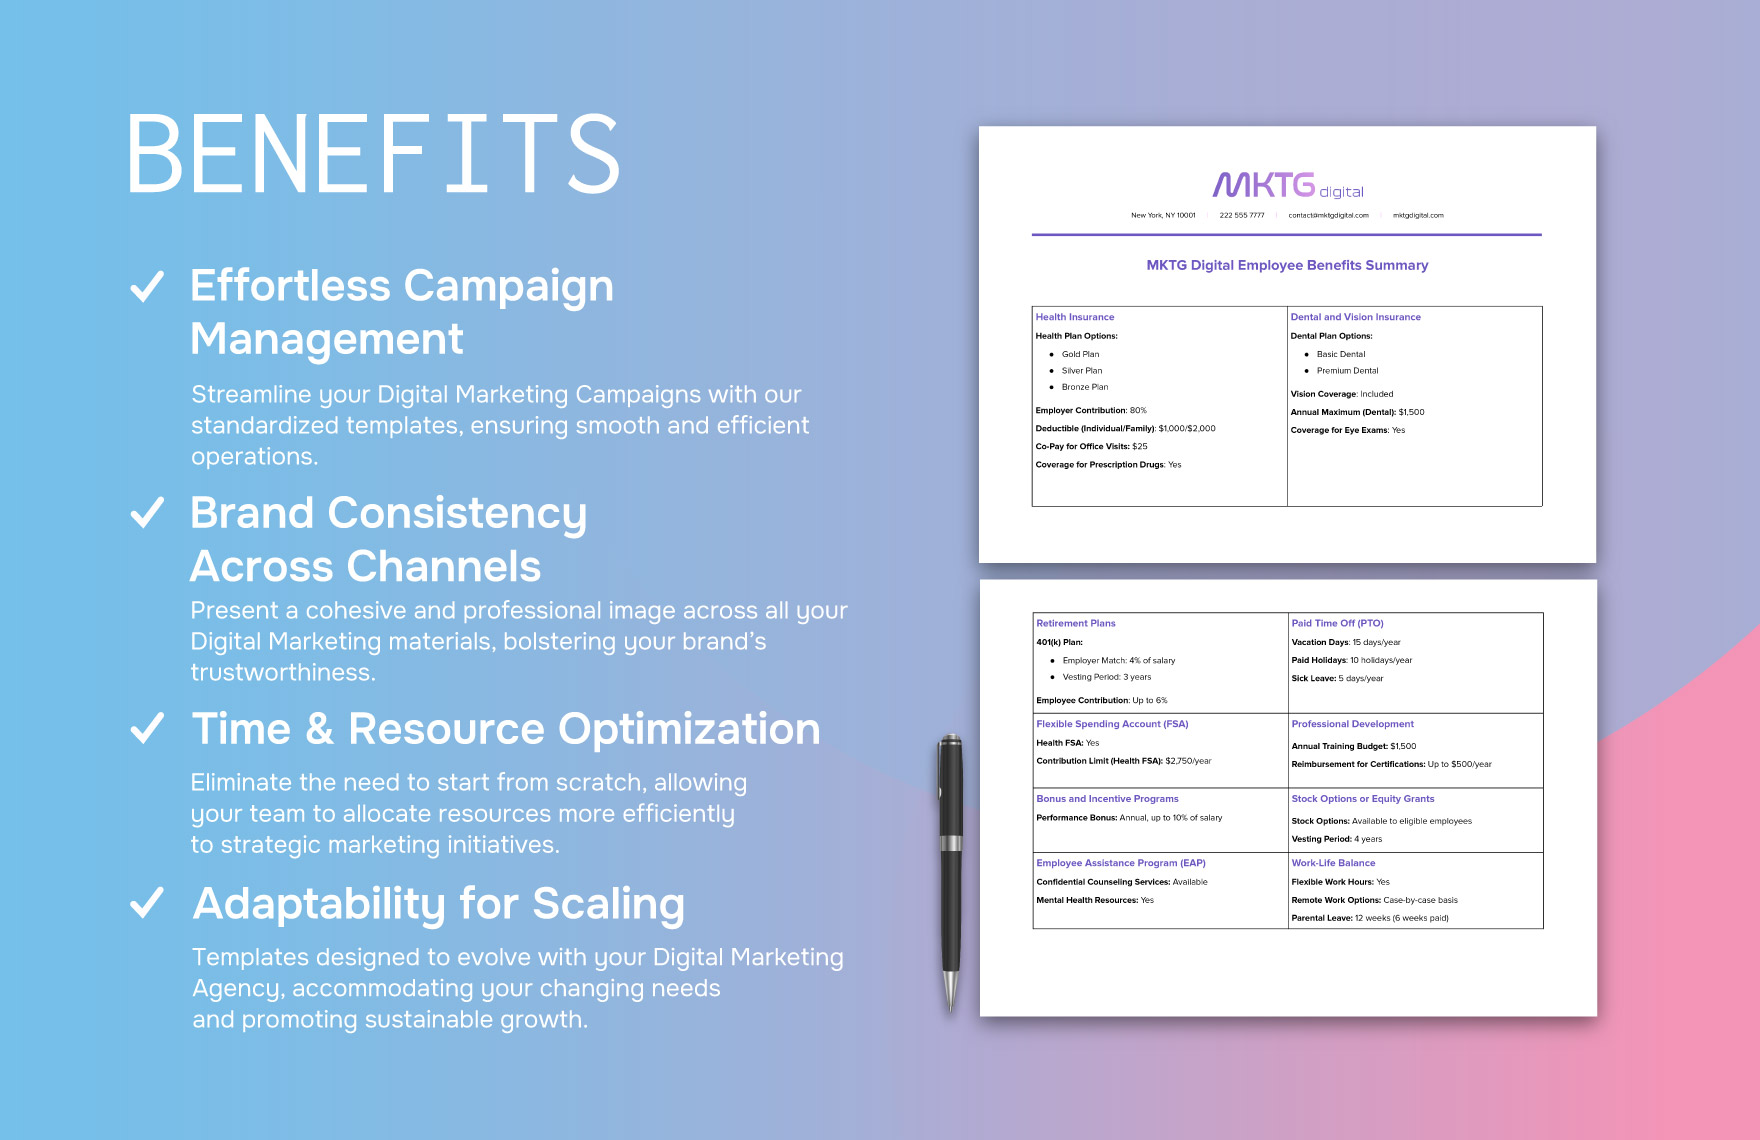 Digital Marketing Agency Employee Benefits Summary Template